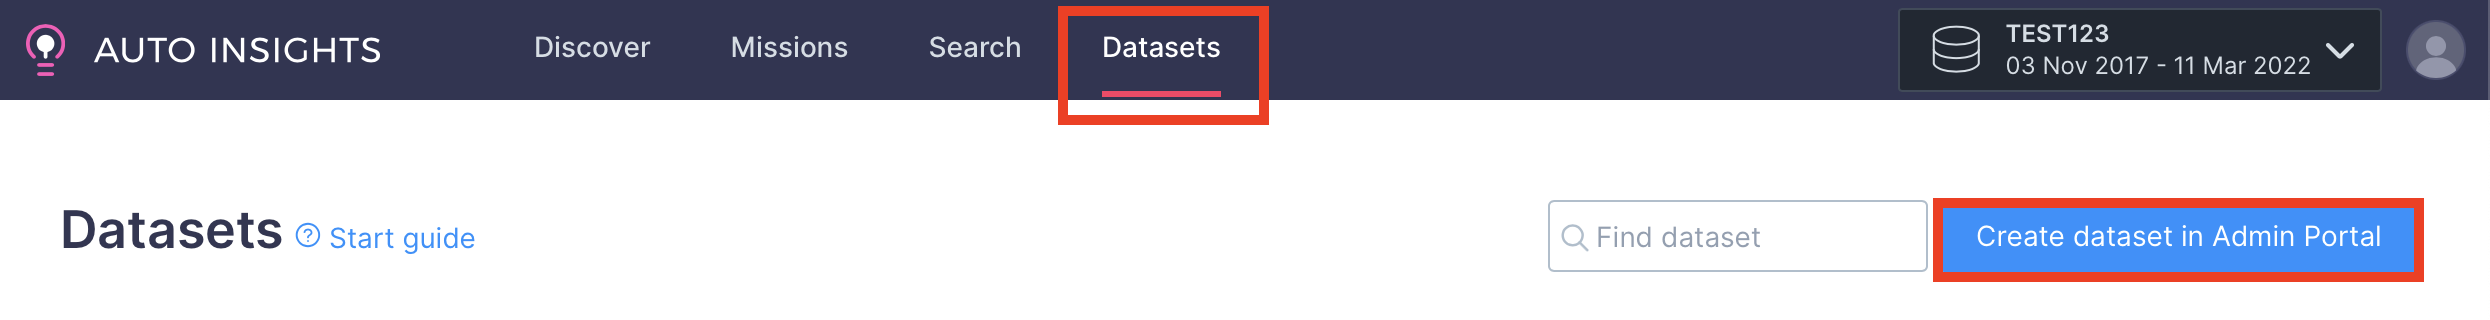 Create dataset in Admin Portal button